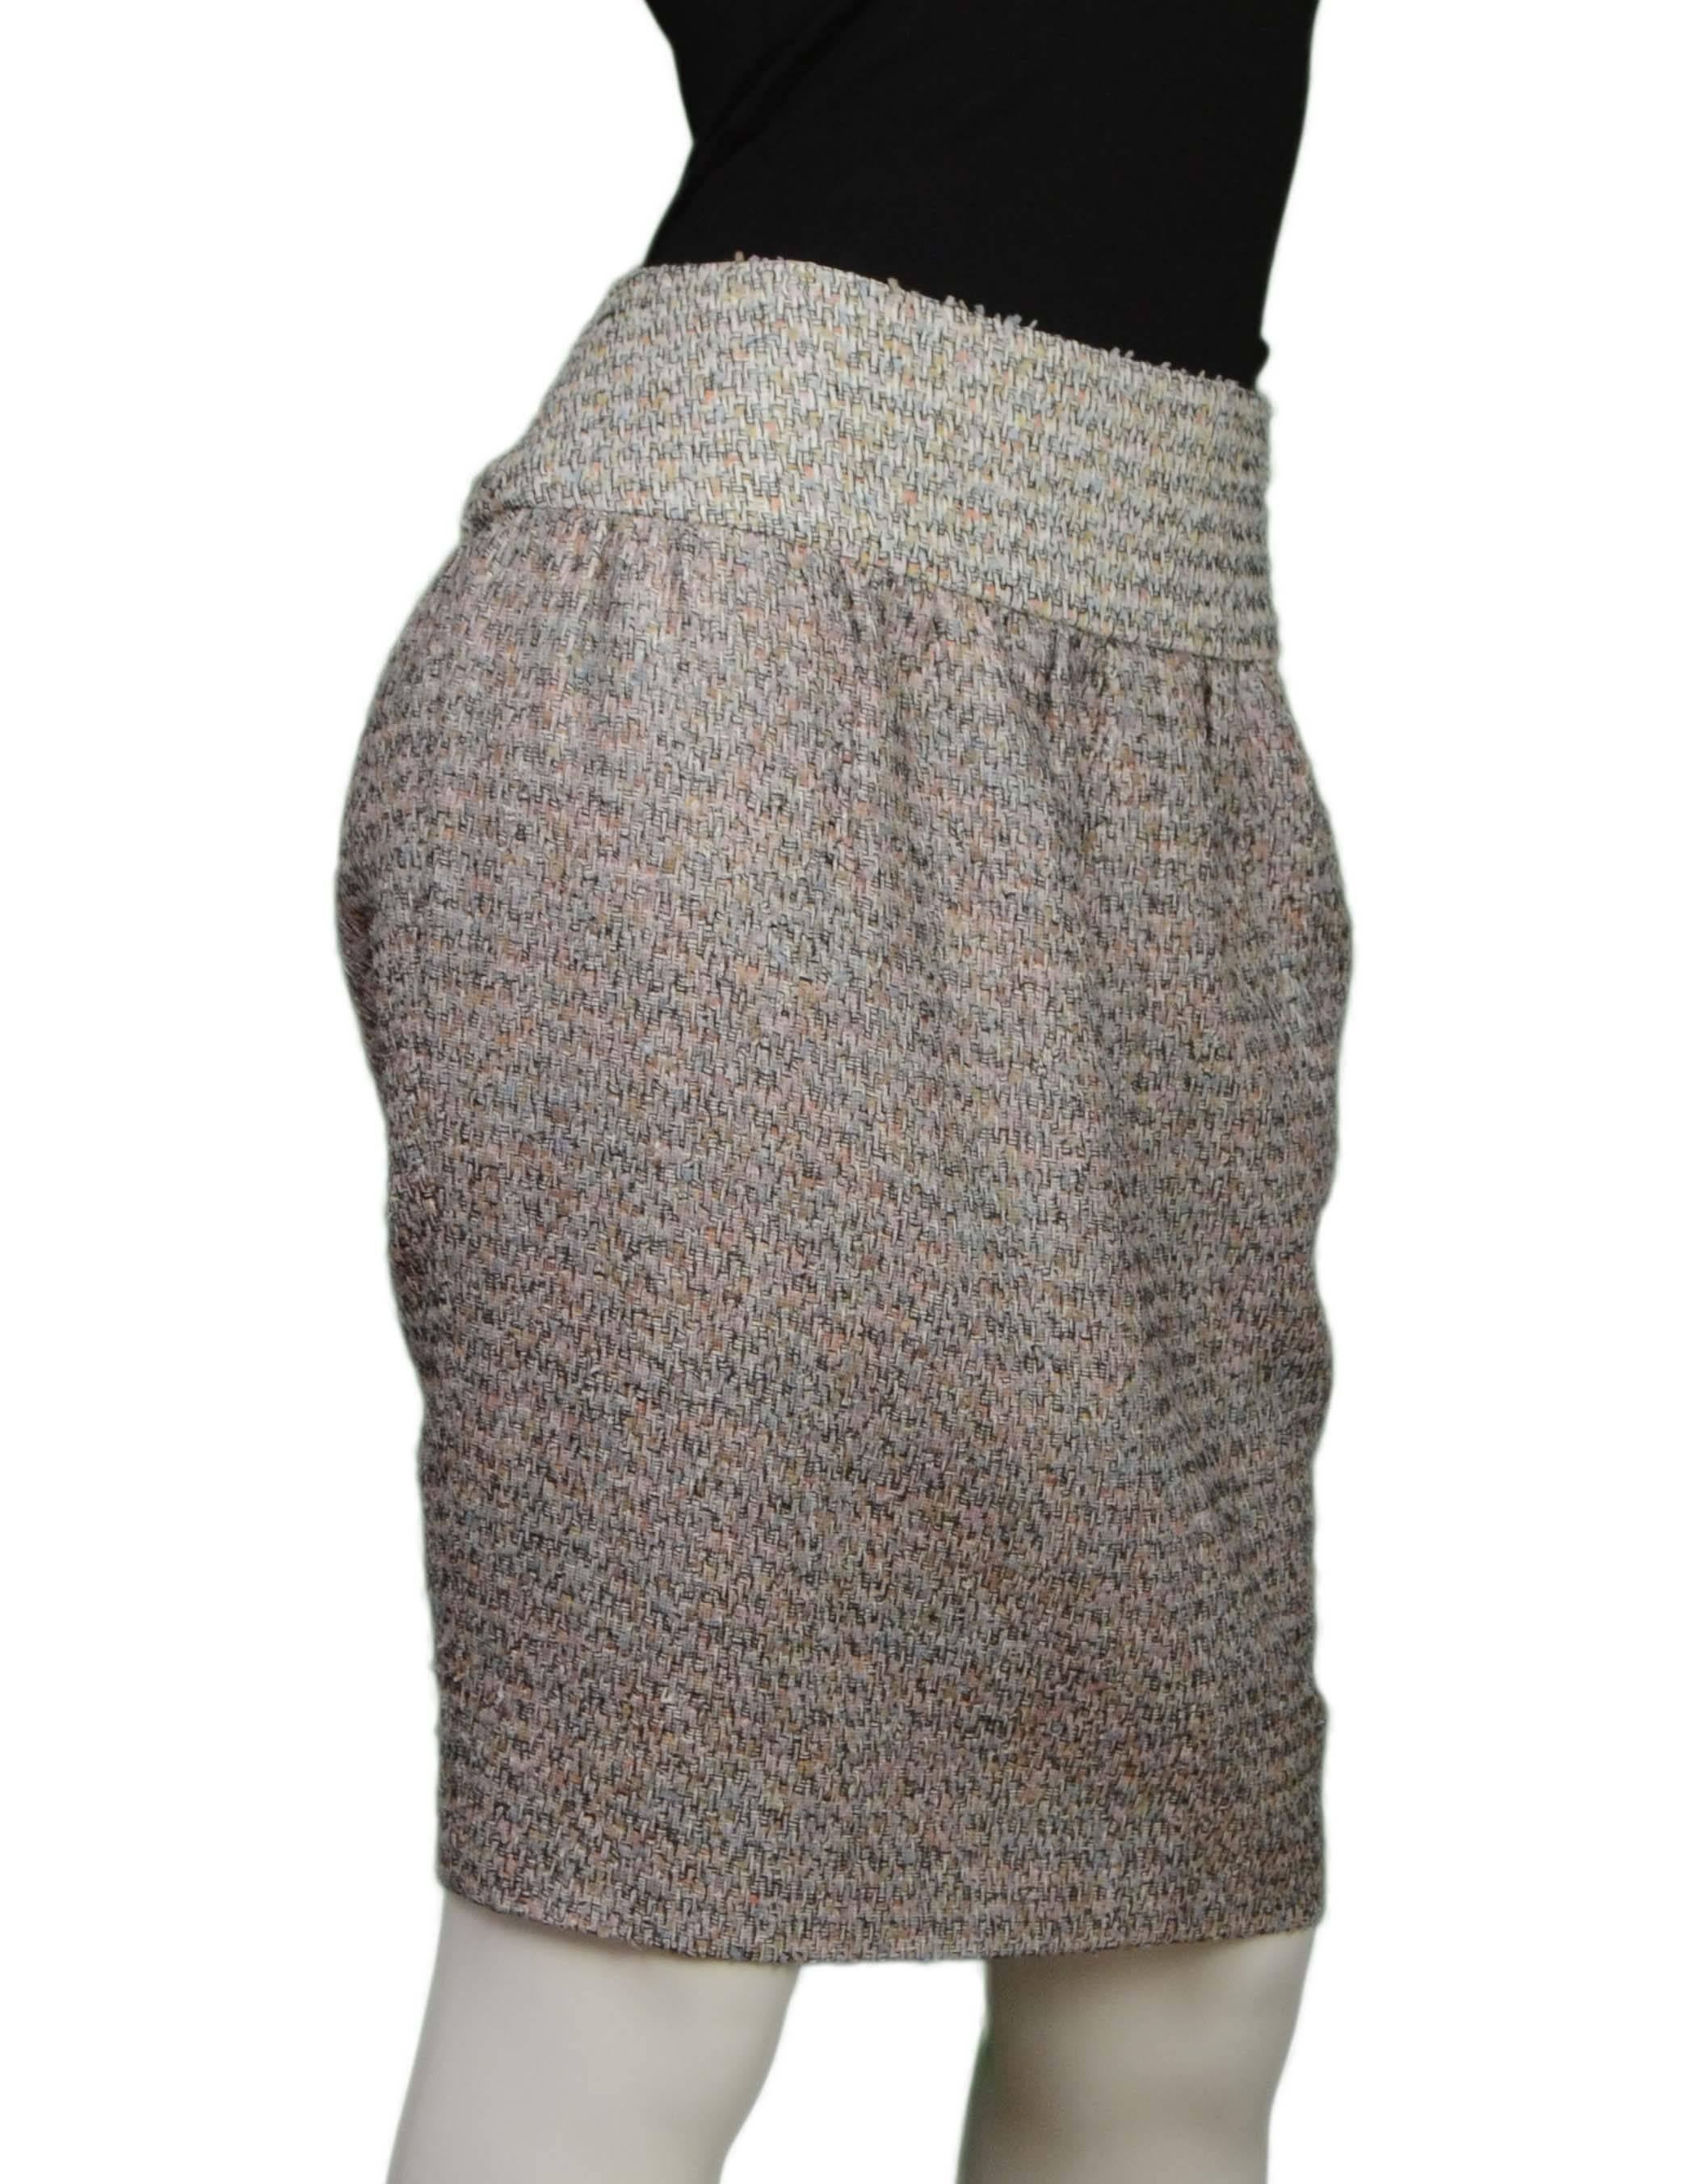 Women's Chanel Multi-Colored Tweed Skirt Suit sz 48